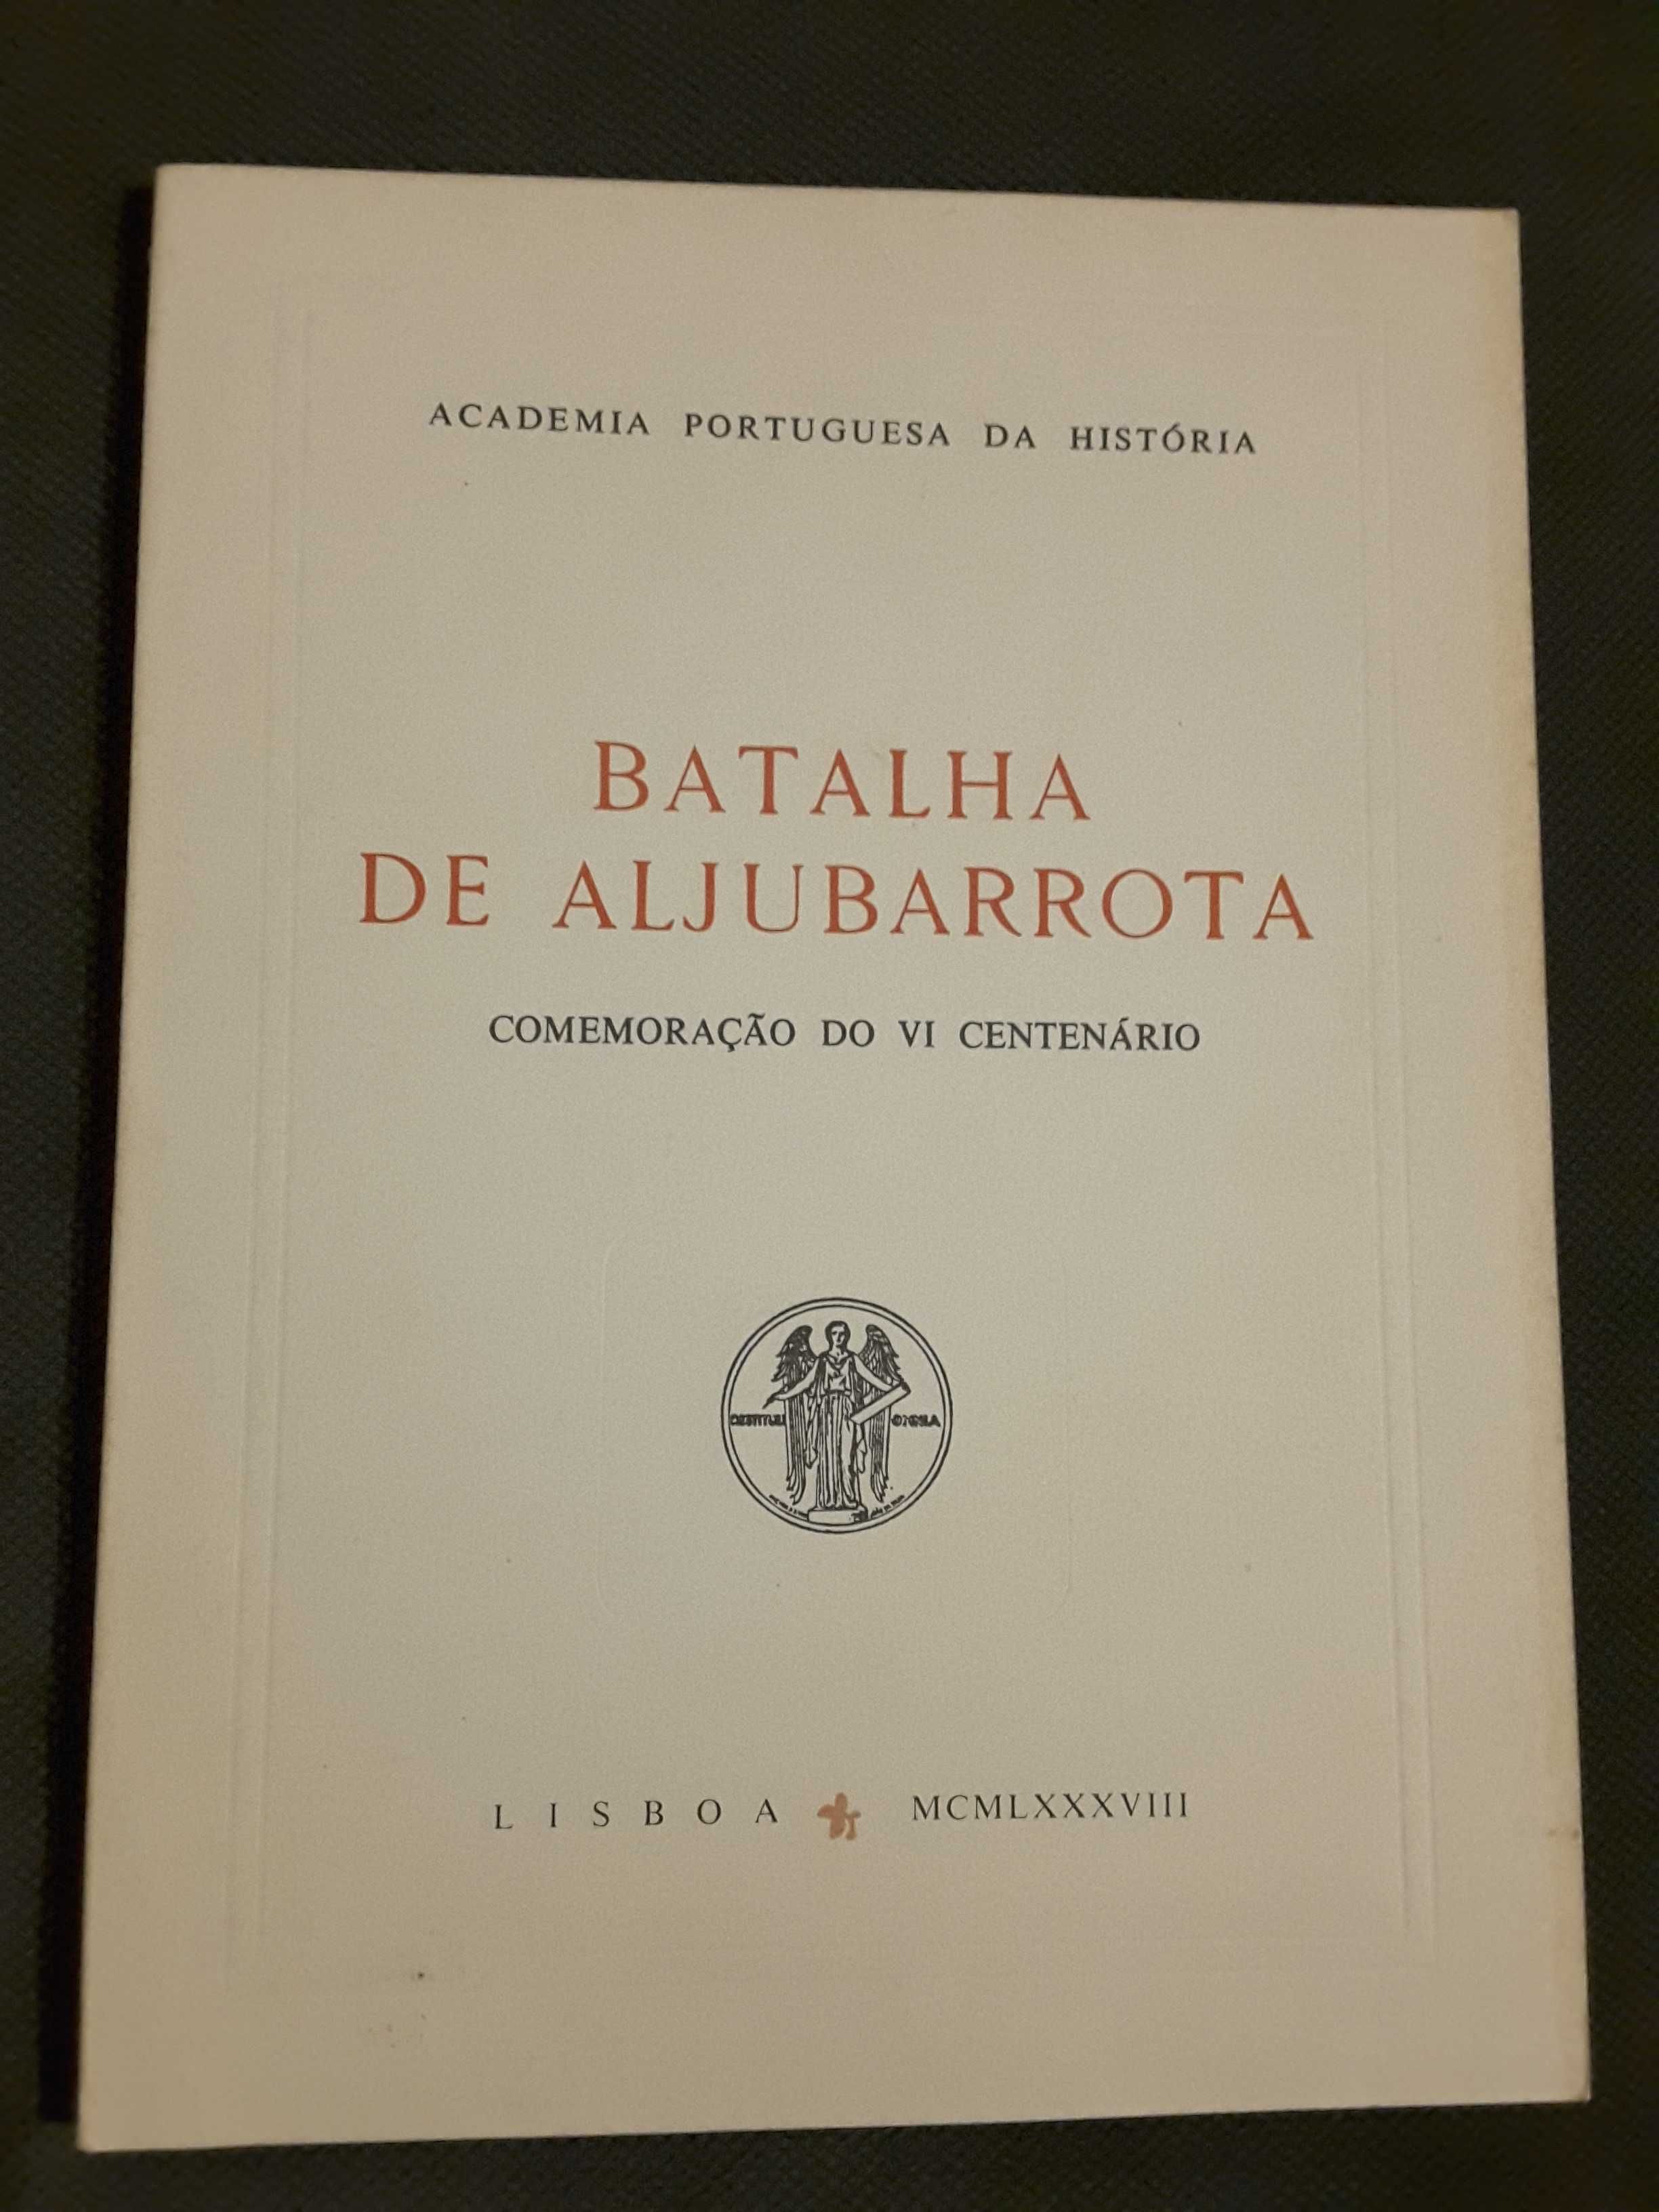 D. Sancho II/ Batalha de Aljubarrota/ Portugal, o Brasil e o Atlântico